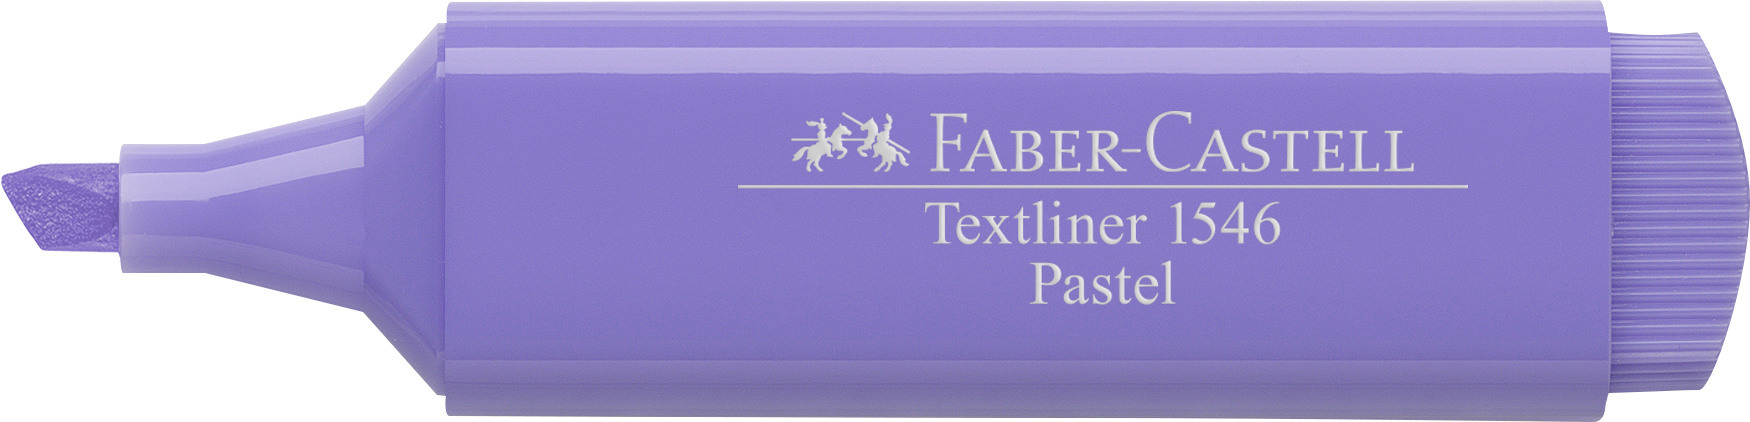 FABER-CASTELL Textliner 1546 154656 pastell, lila